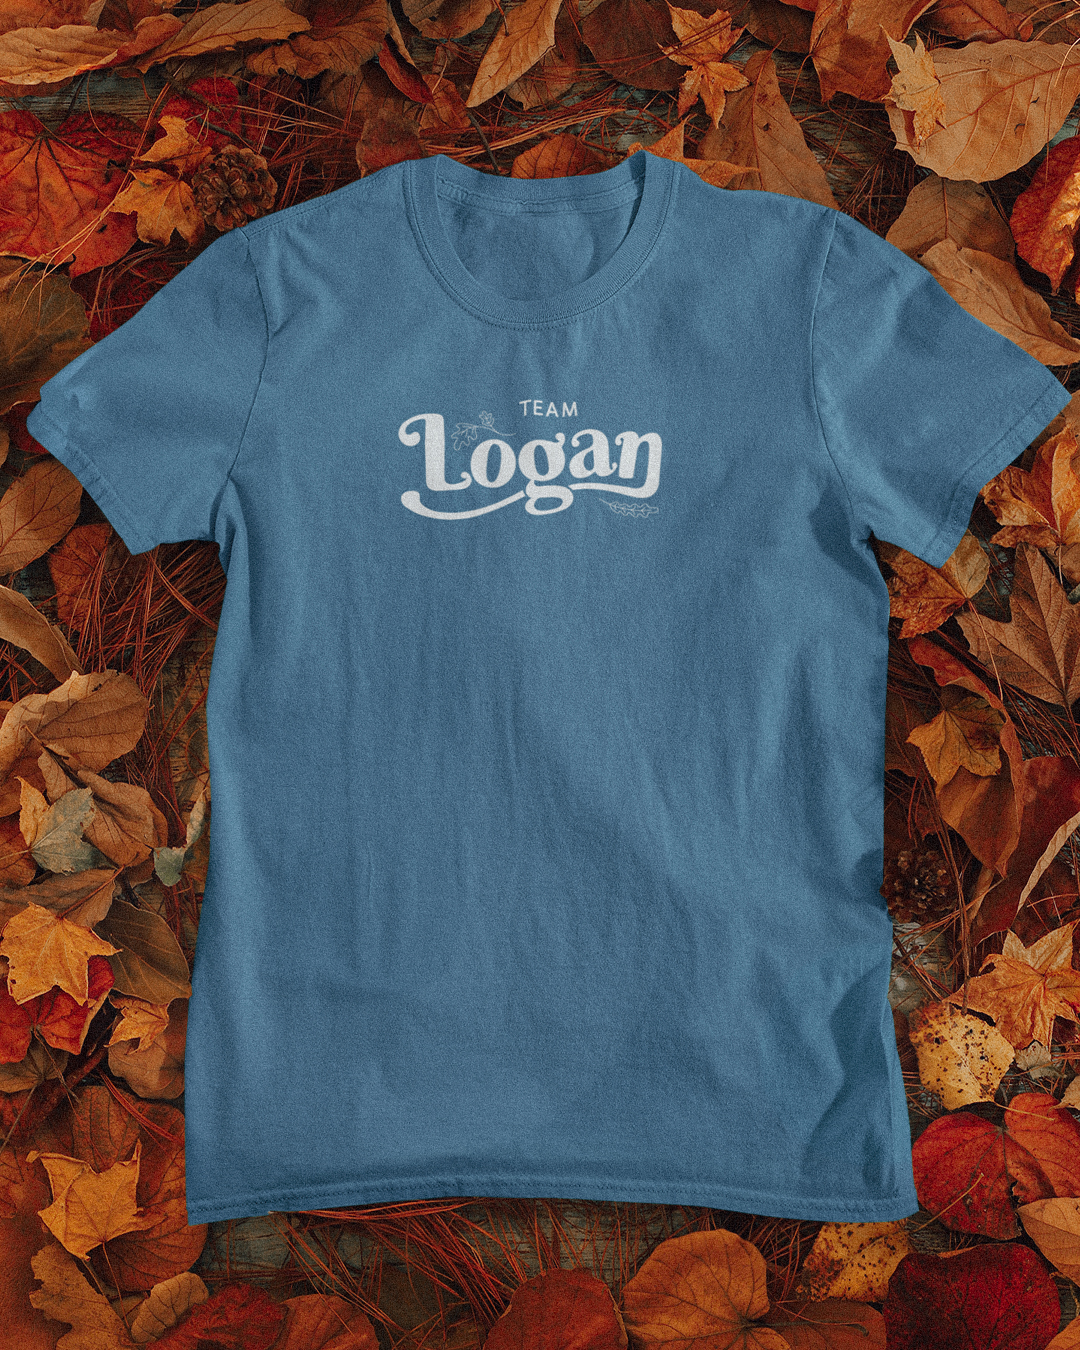 Team Logan Huntzberger T-Shirt - Gilmore Girls Inspired T-Shirt - Rory Gilmore's Boyfriends - Team Logan Huntzberger Inspired T-Shirt